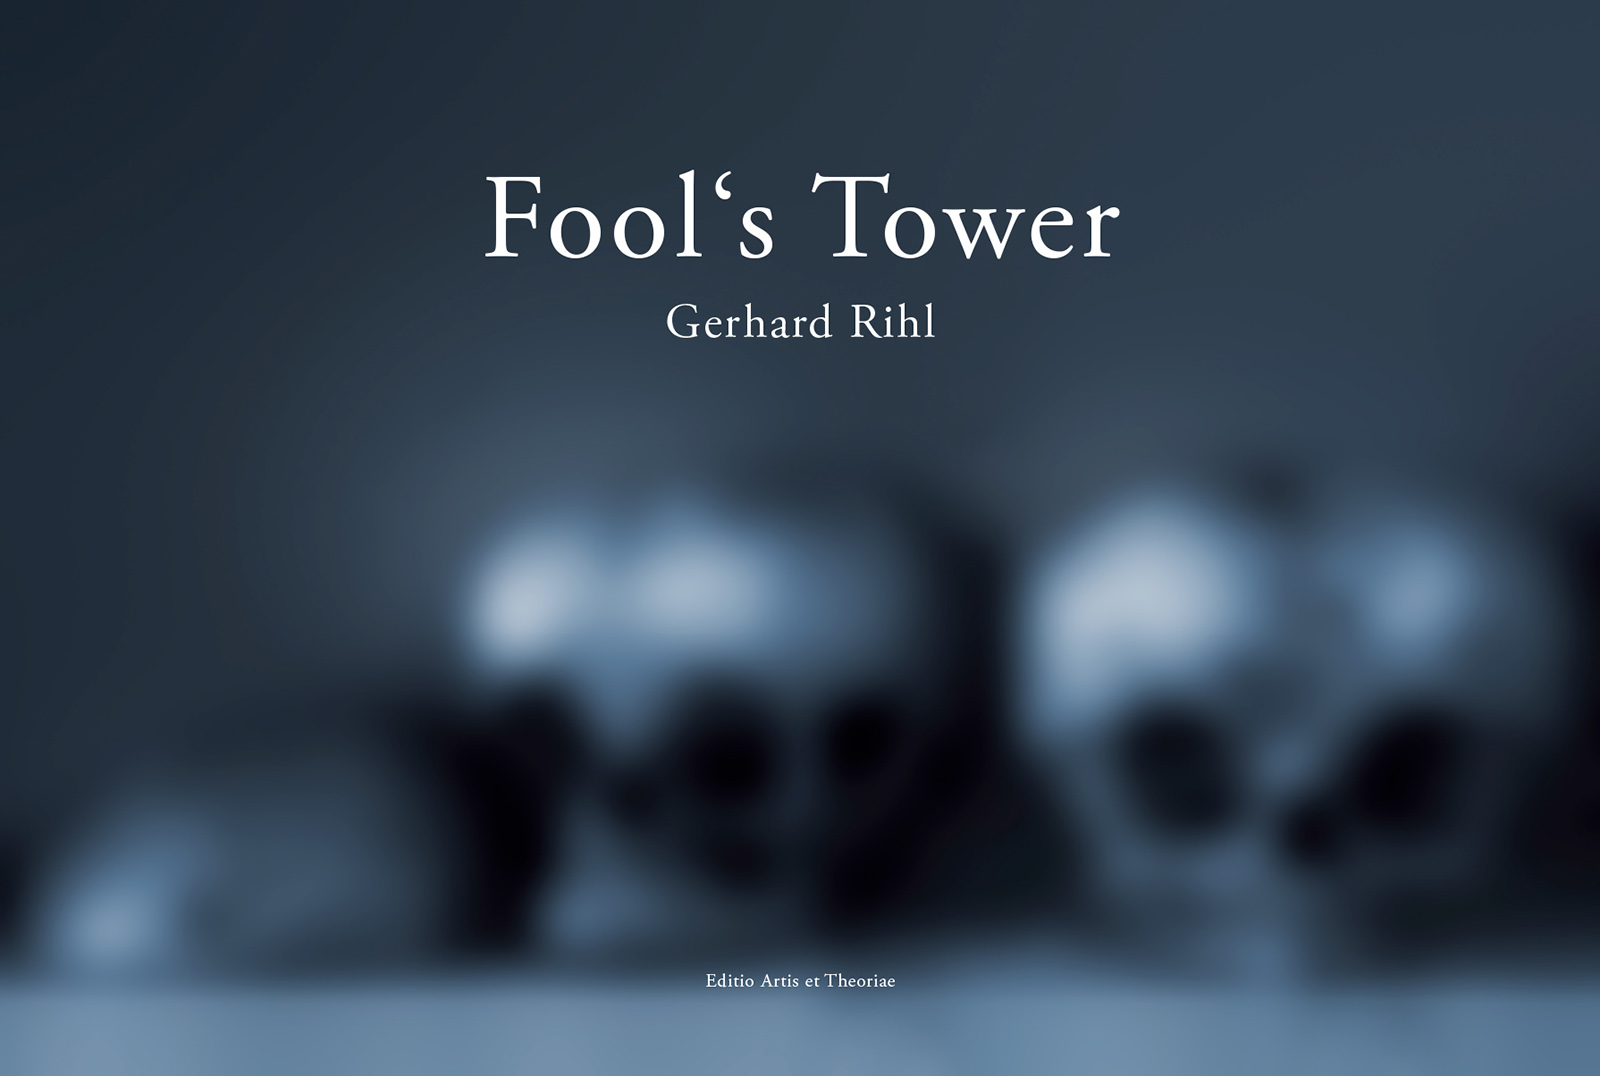 Gerhard Rihl: Buch "Fool's Tower" – Cover-Seite